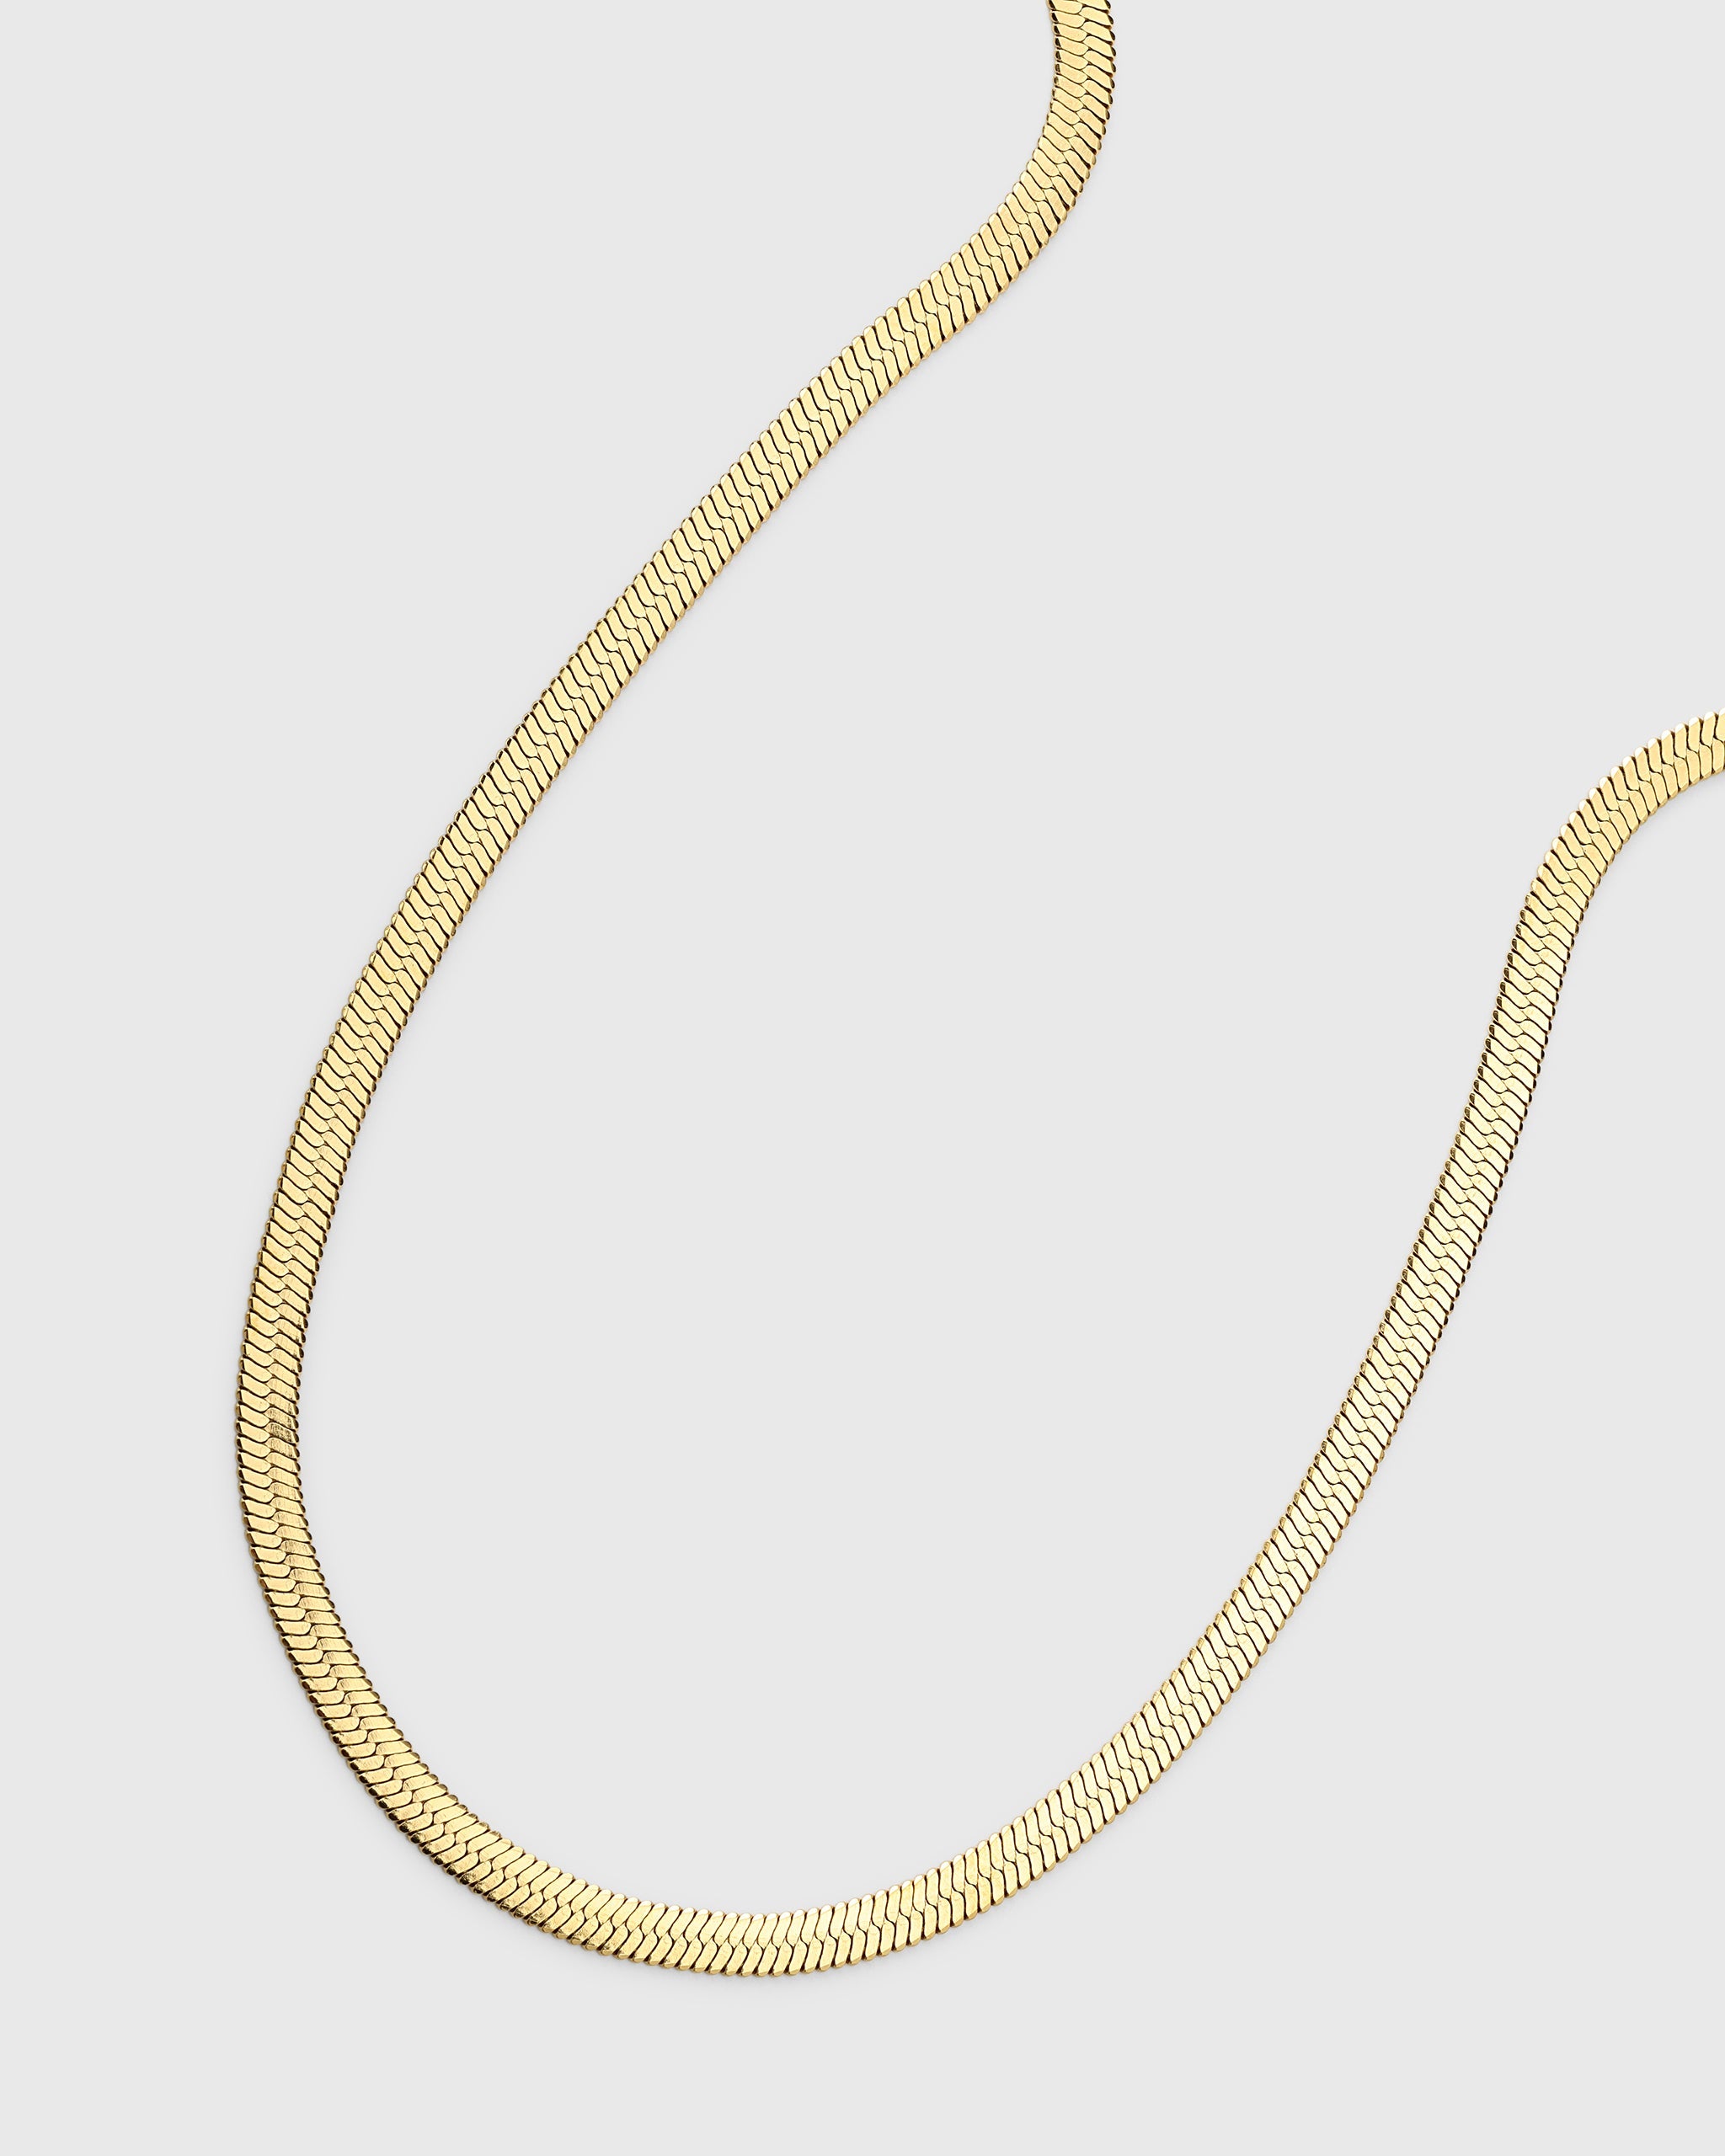 Herringbone Chain Necklace Yellow Gold - State St. Jewelers